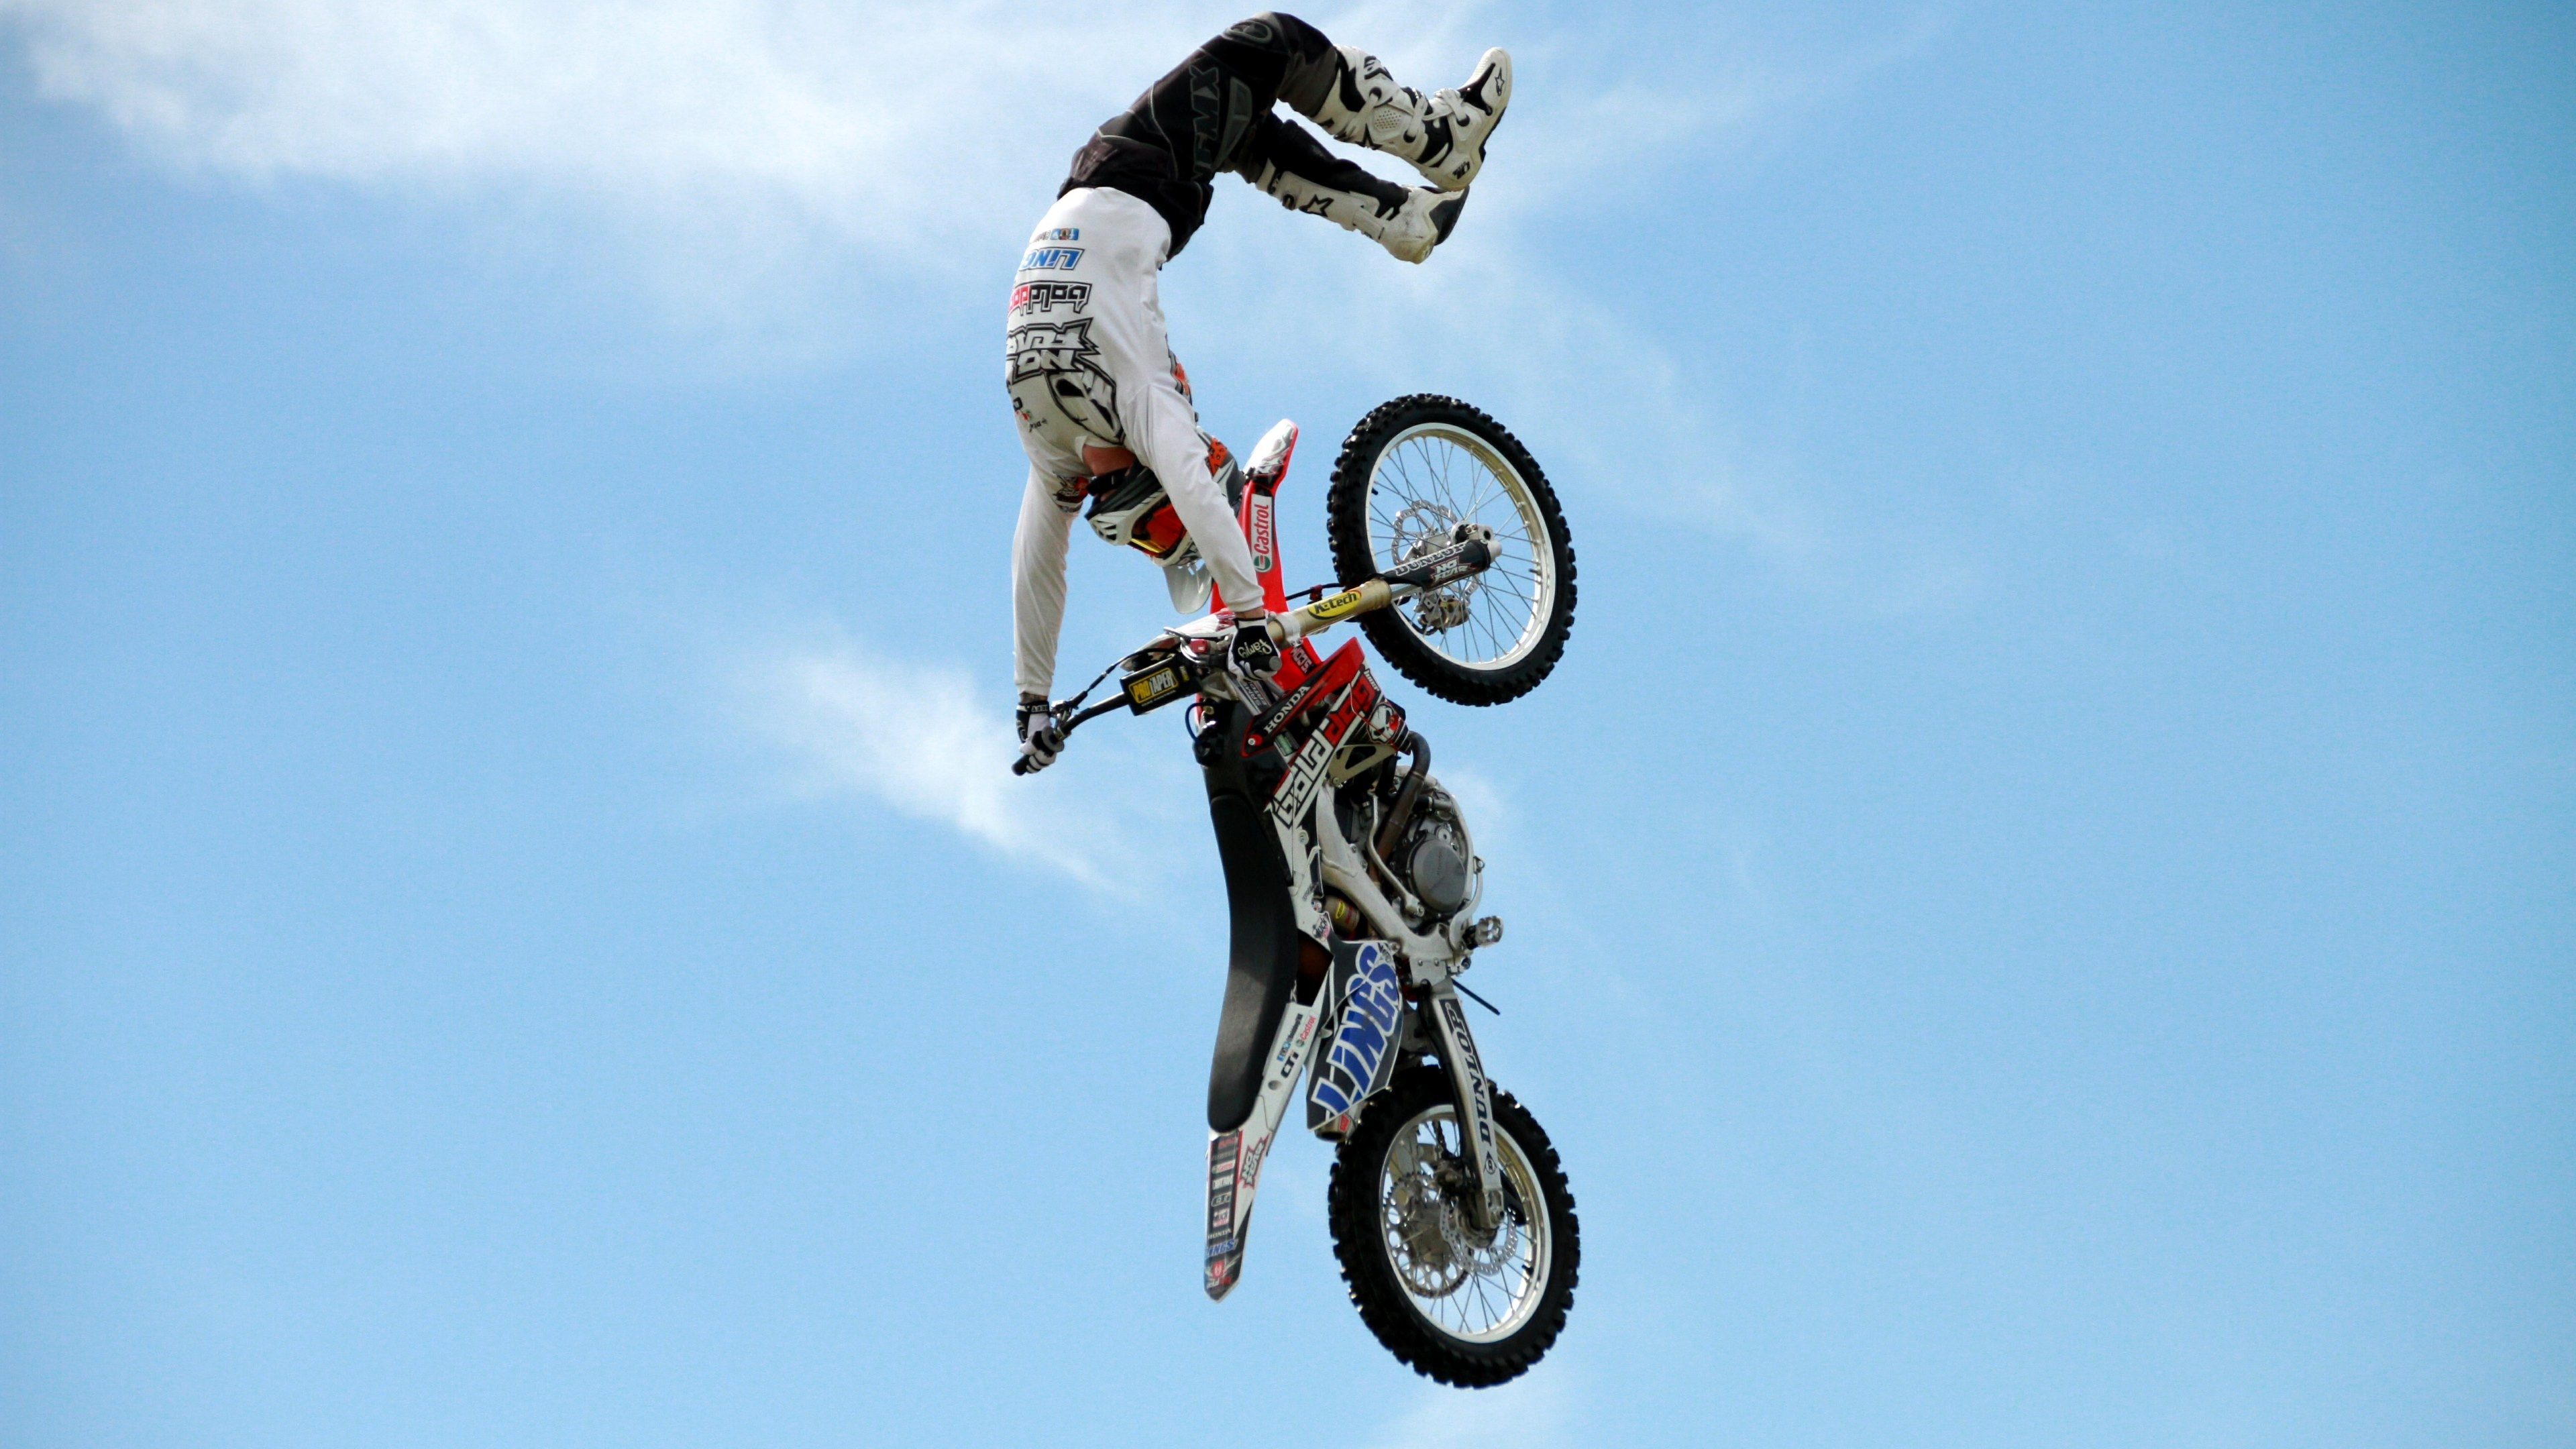 Stunt: Motorcross, Stuntman in the air, Acrobatics on a dirt bike. 3840x2160 4K Wallpaper.